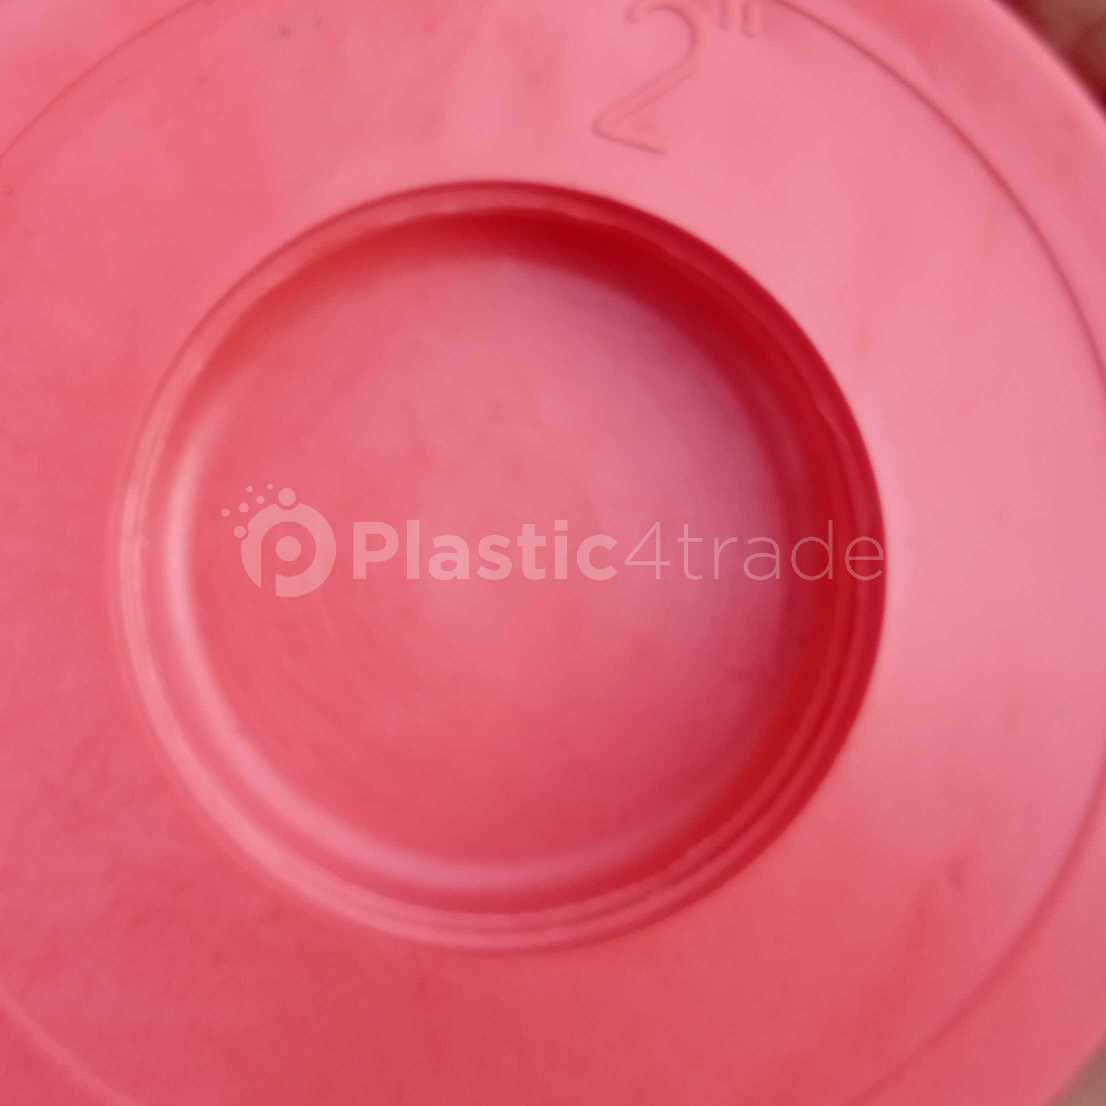 ALL PLASTIC LDPE Reprocess Granule Injection Molding uttar pradesh india Plastic4trade